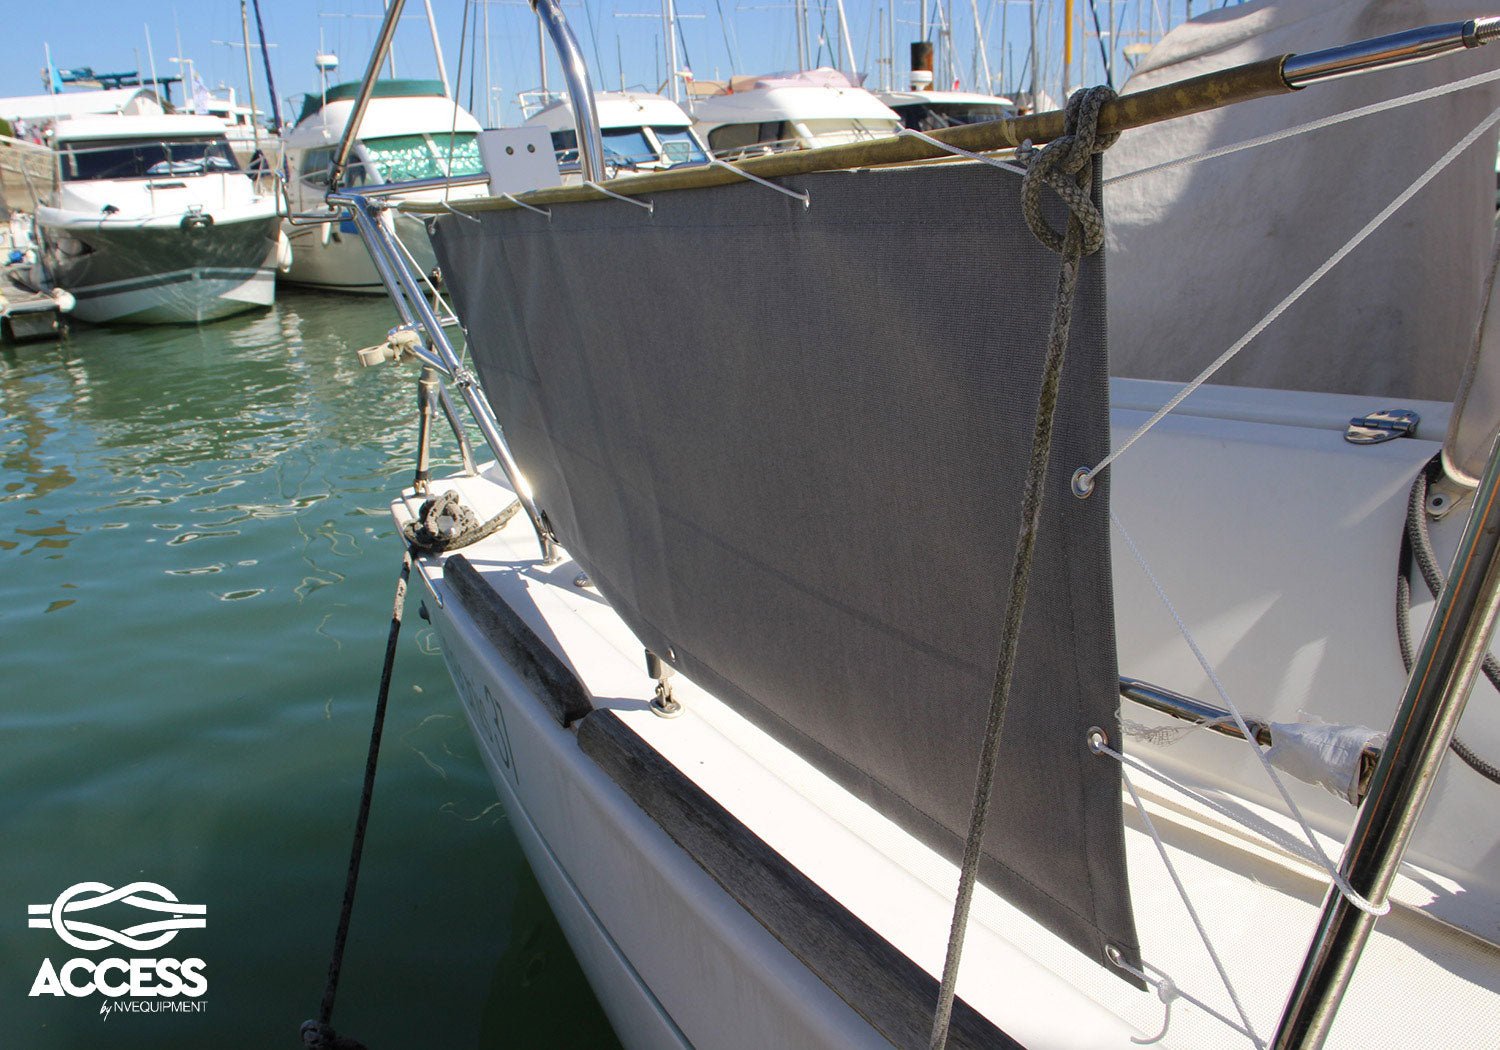 Windbreaks for sailboats